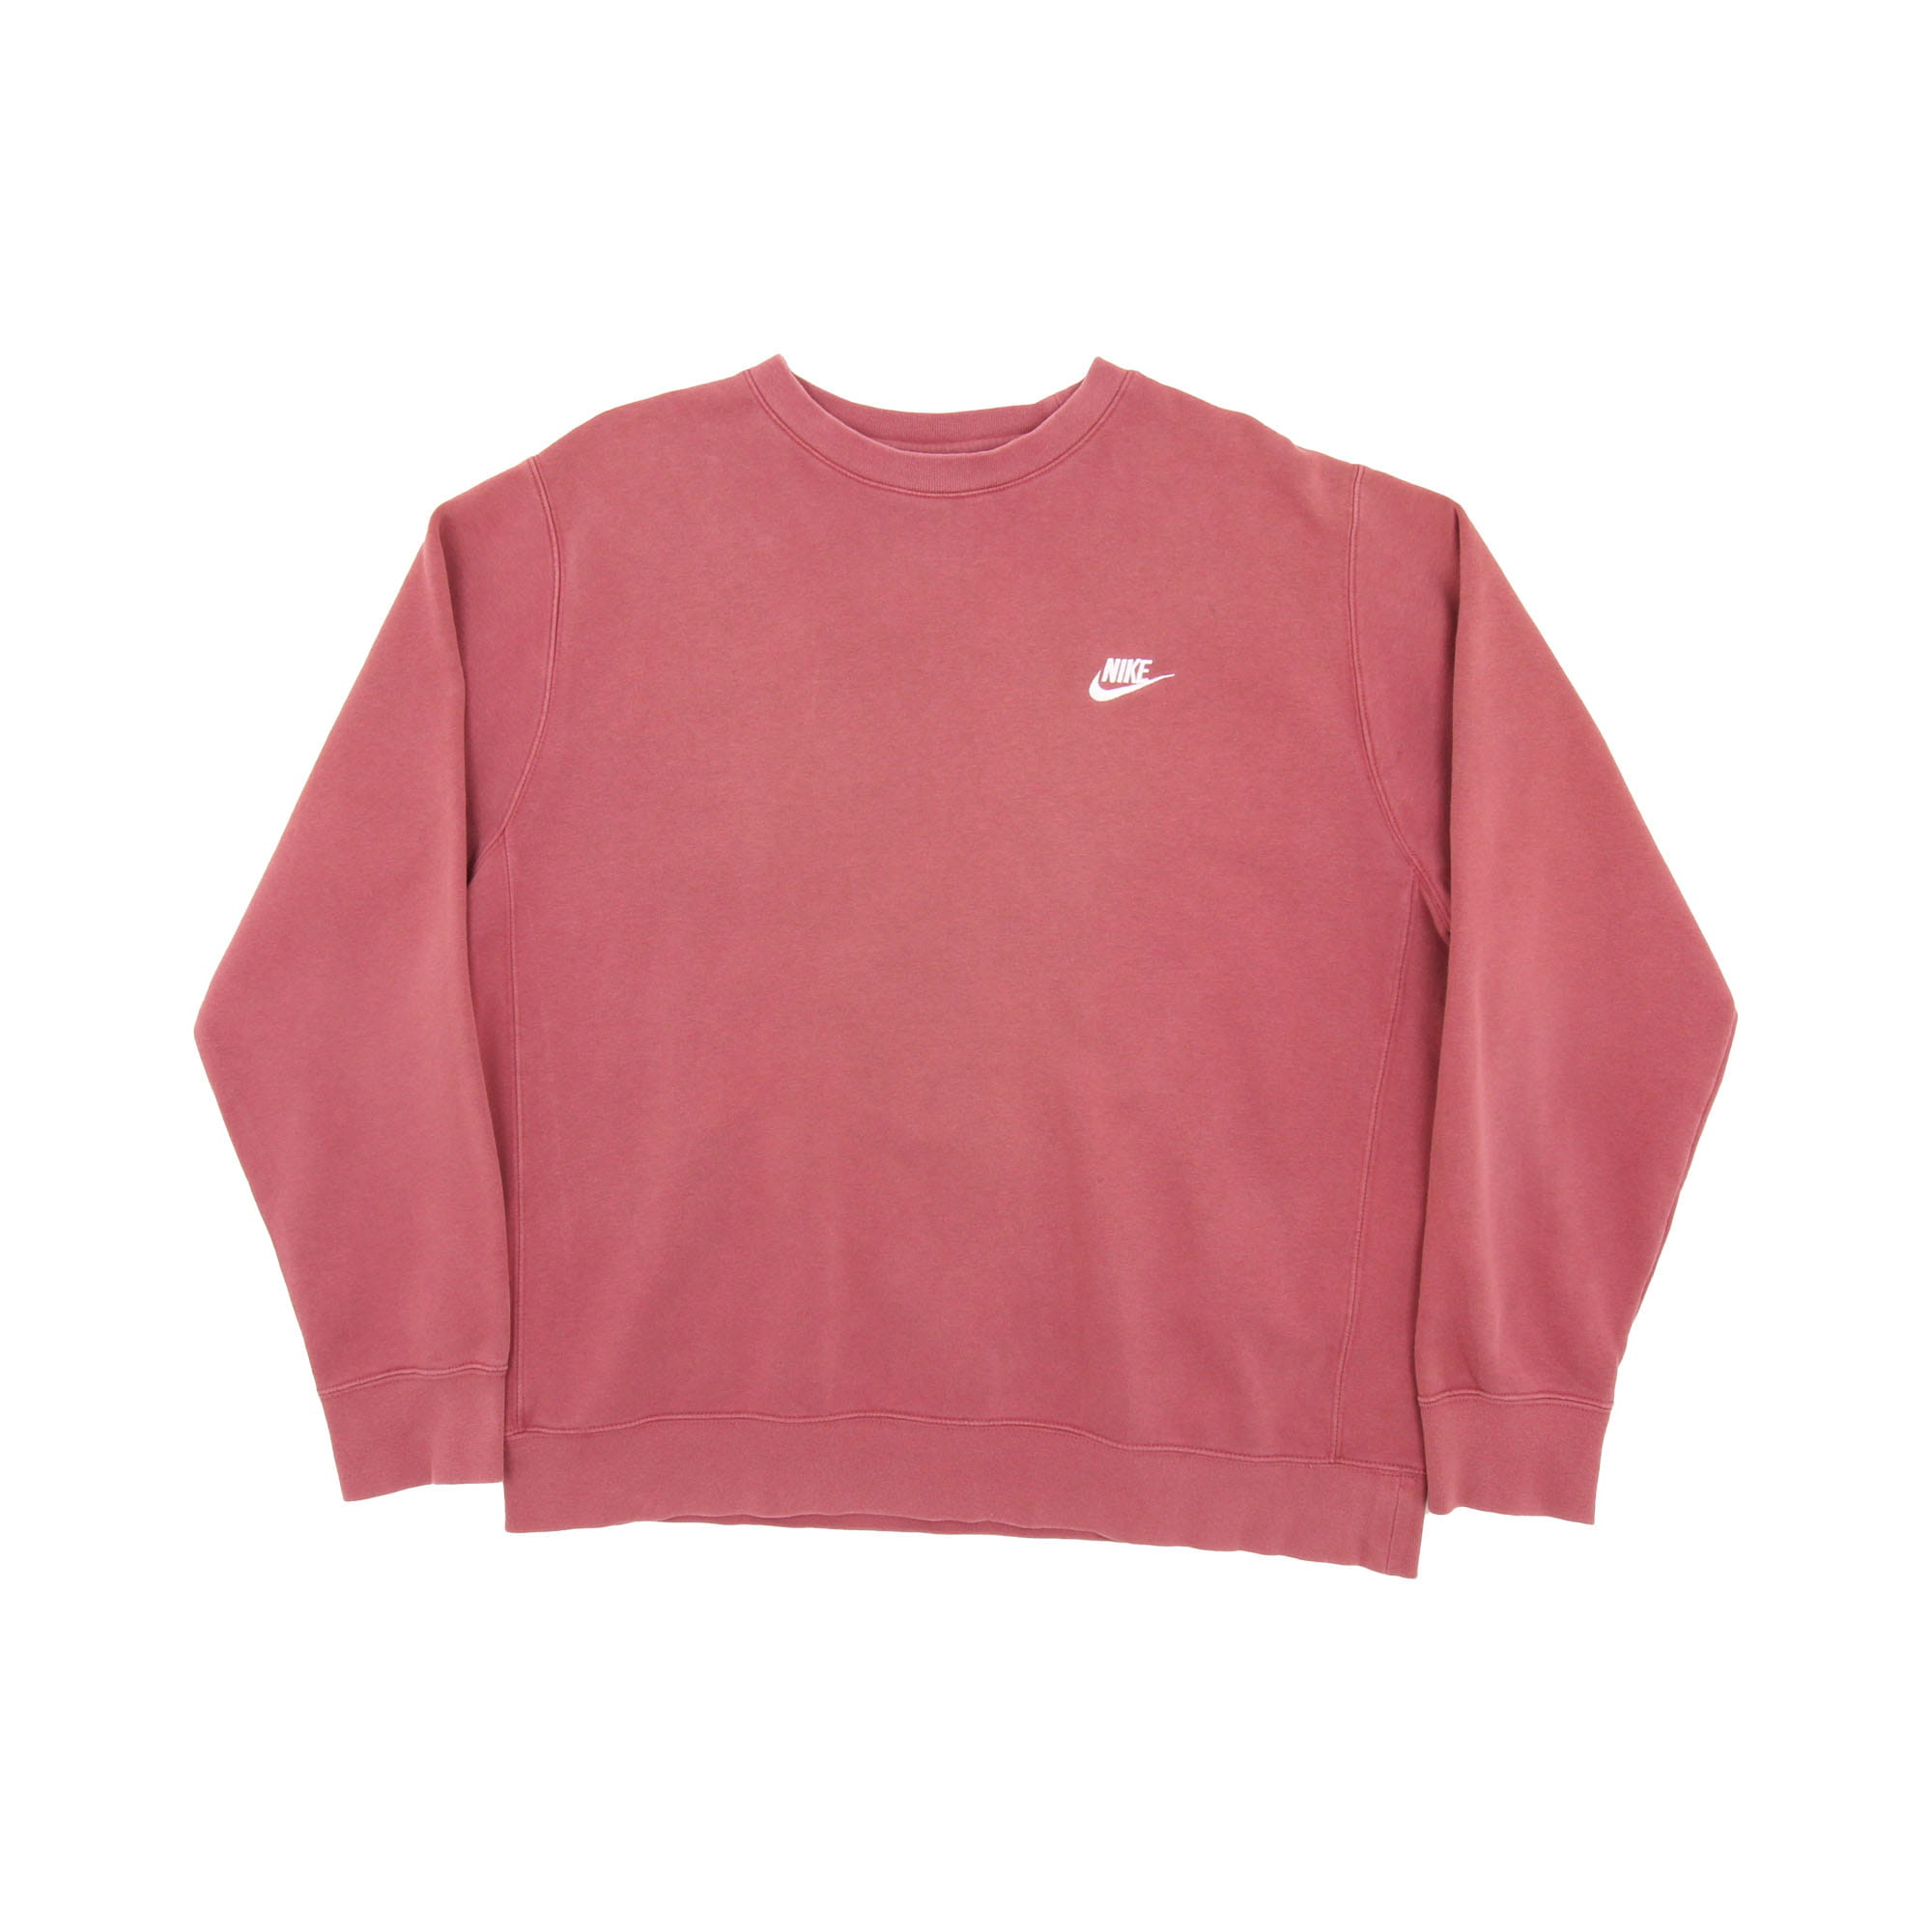 Nike Embroidered Logo Sweatshirt -  M/L